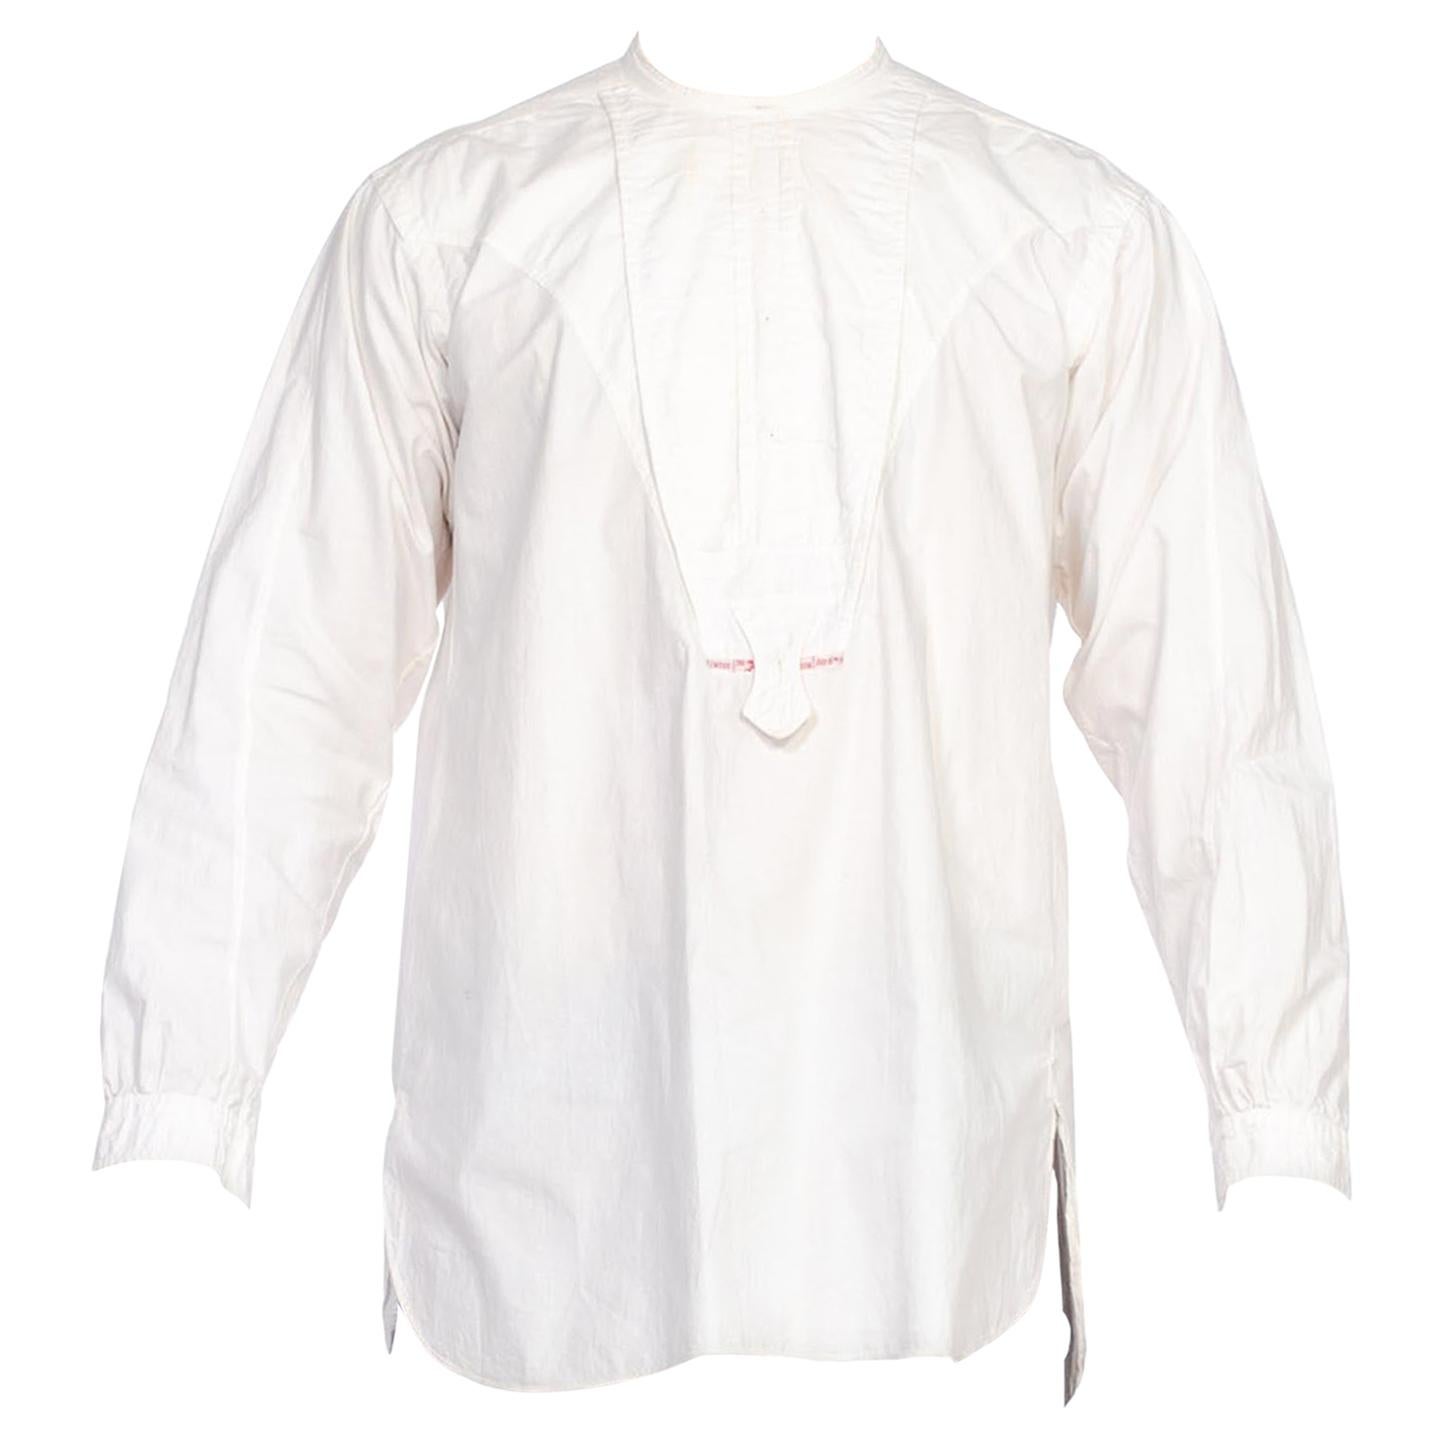 Victorian White Organic Cotton Men's Antique Bib Front Shirt Dated 1880 For Sale